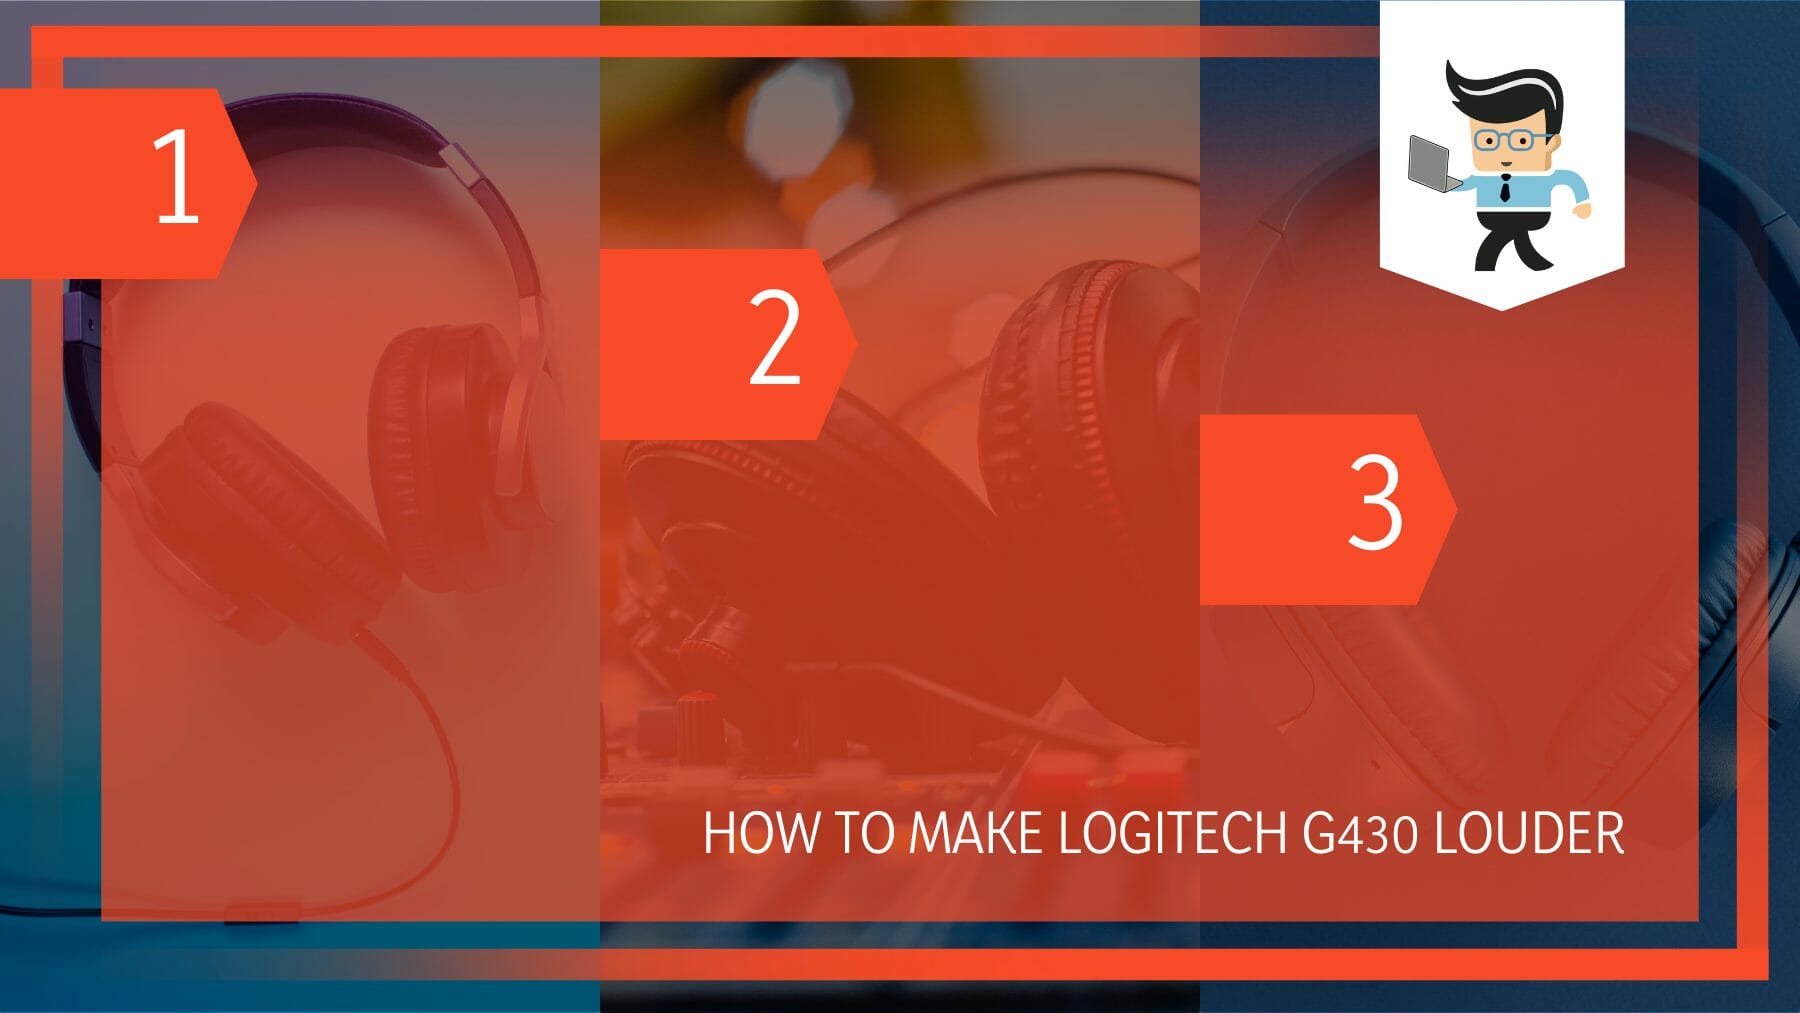 Logitech G430 Louder Headphone